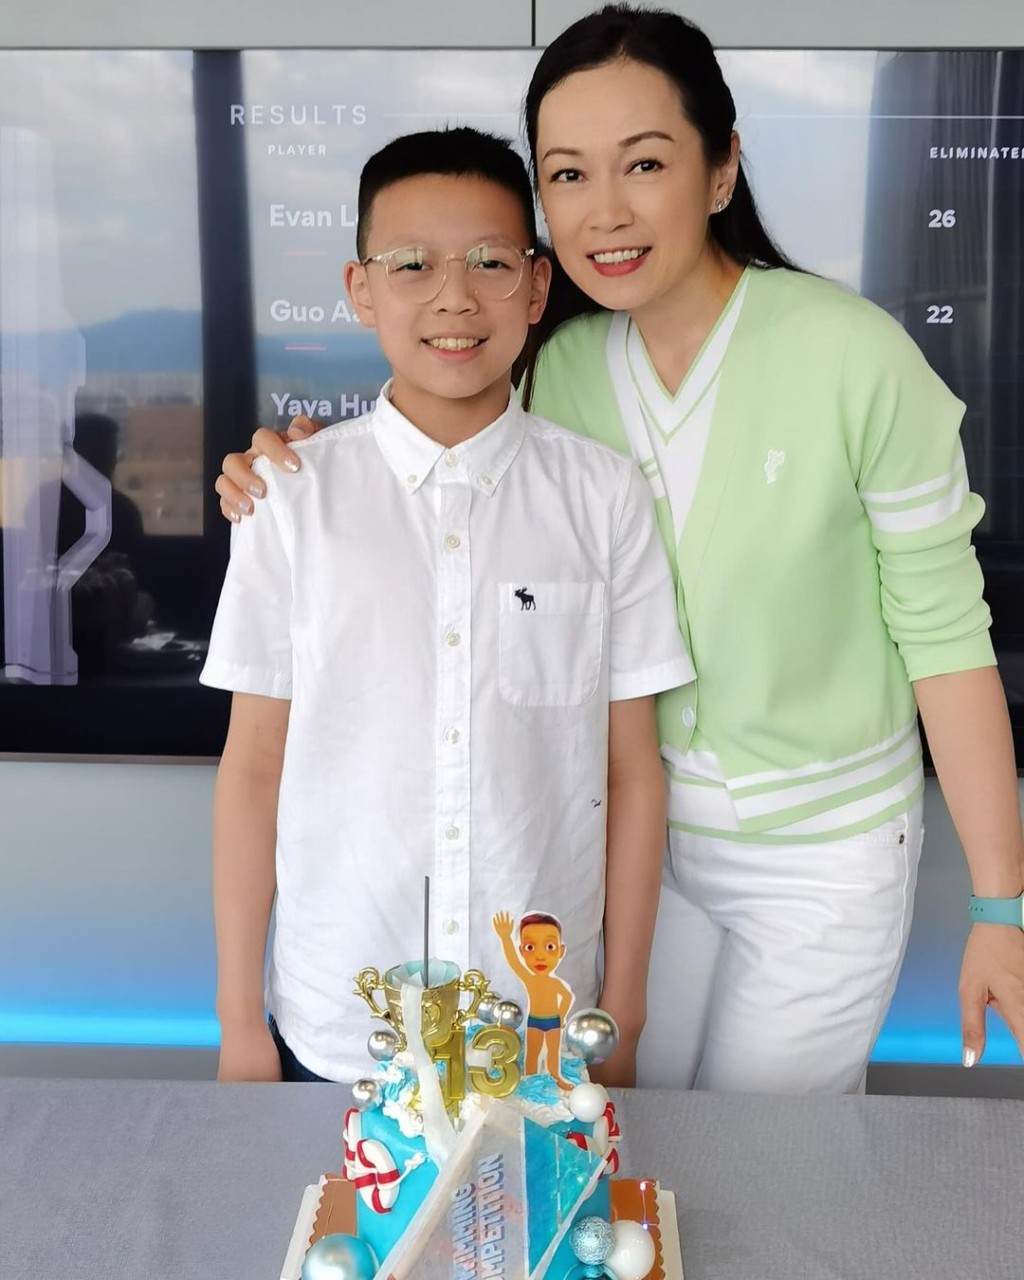 Evan拍在姚瑩瑩身旁合照時，高度已貼近身高170cm的媽媽。